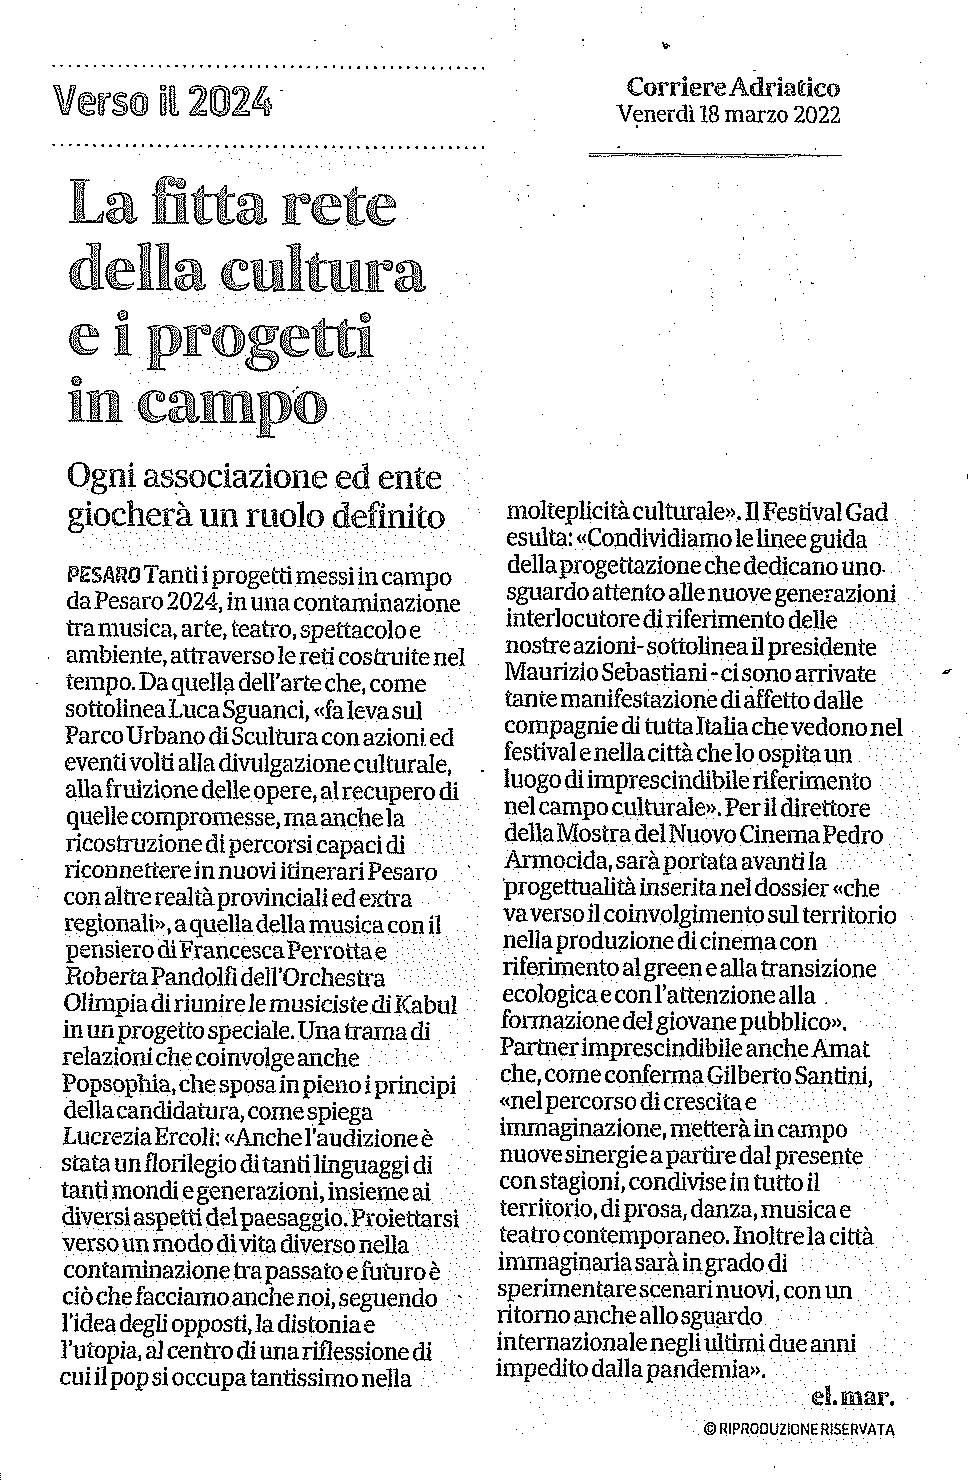 Corriere_Adriatico_18-03-22.jpg